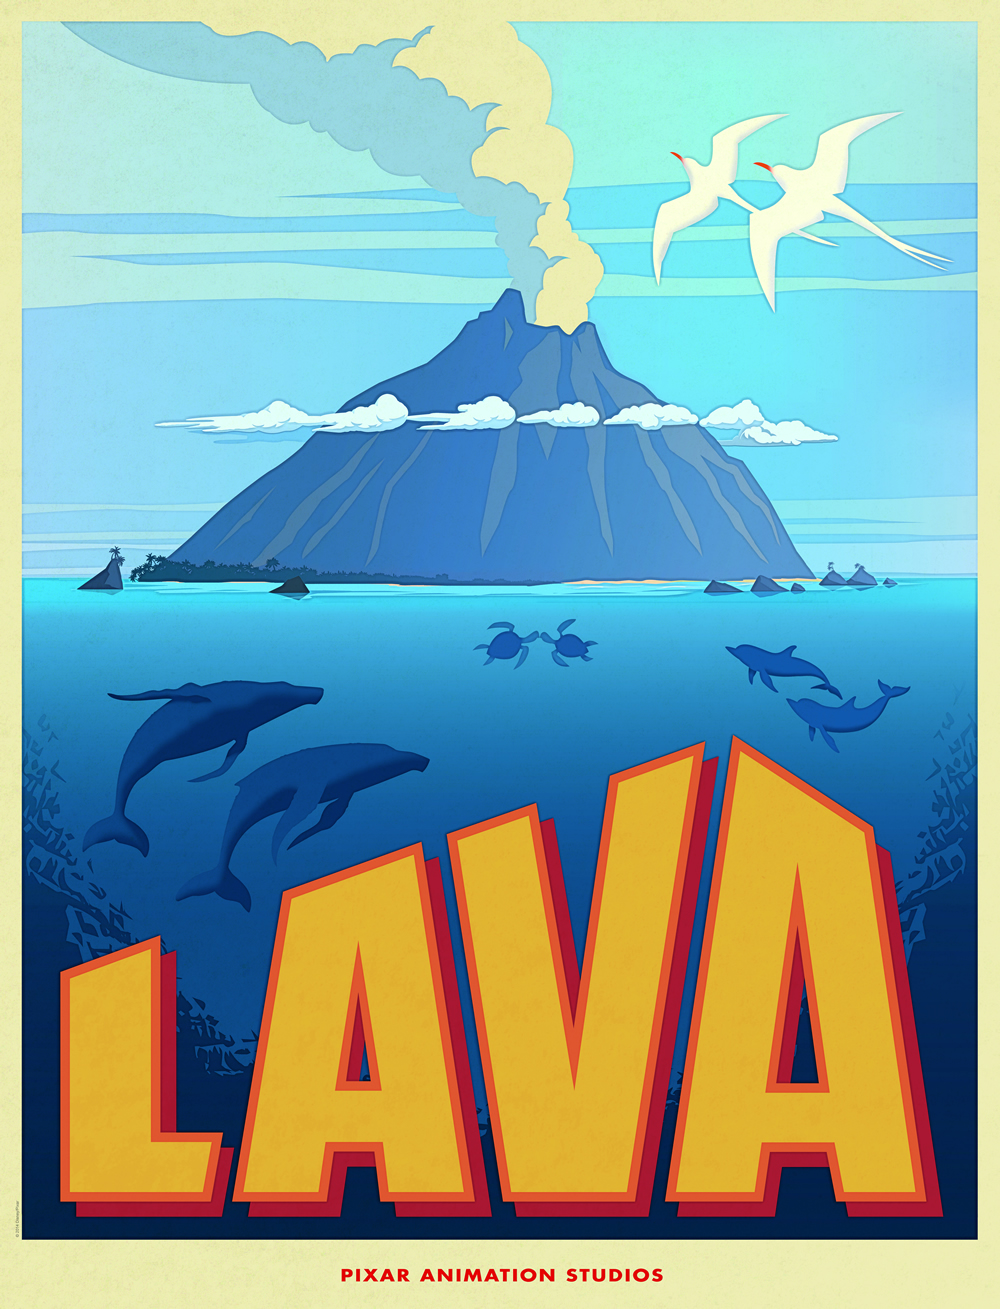 Pixar LAVA poster